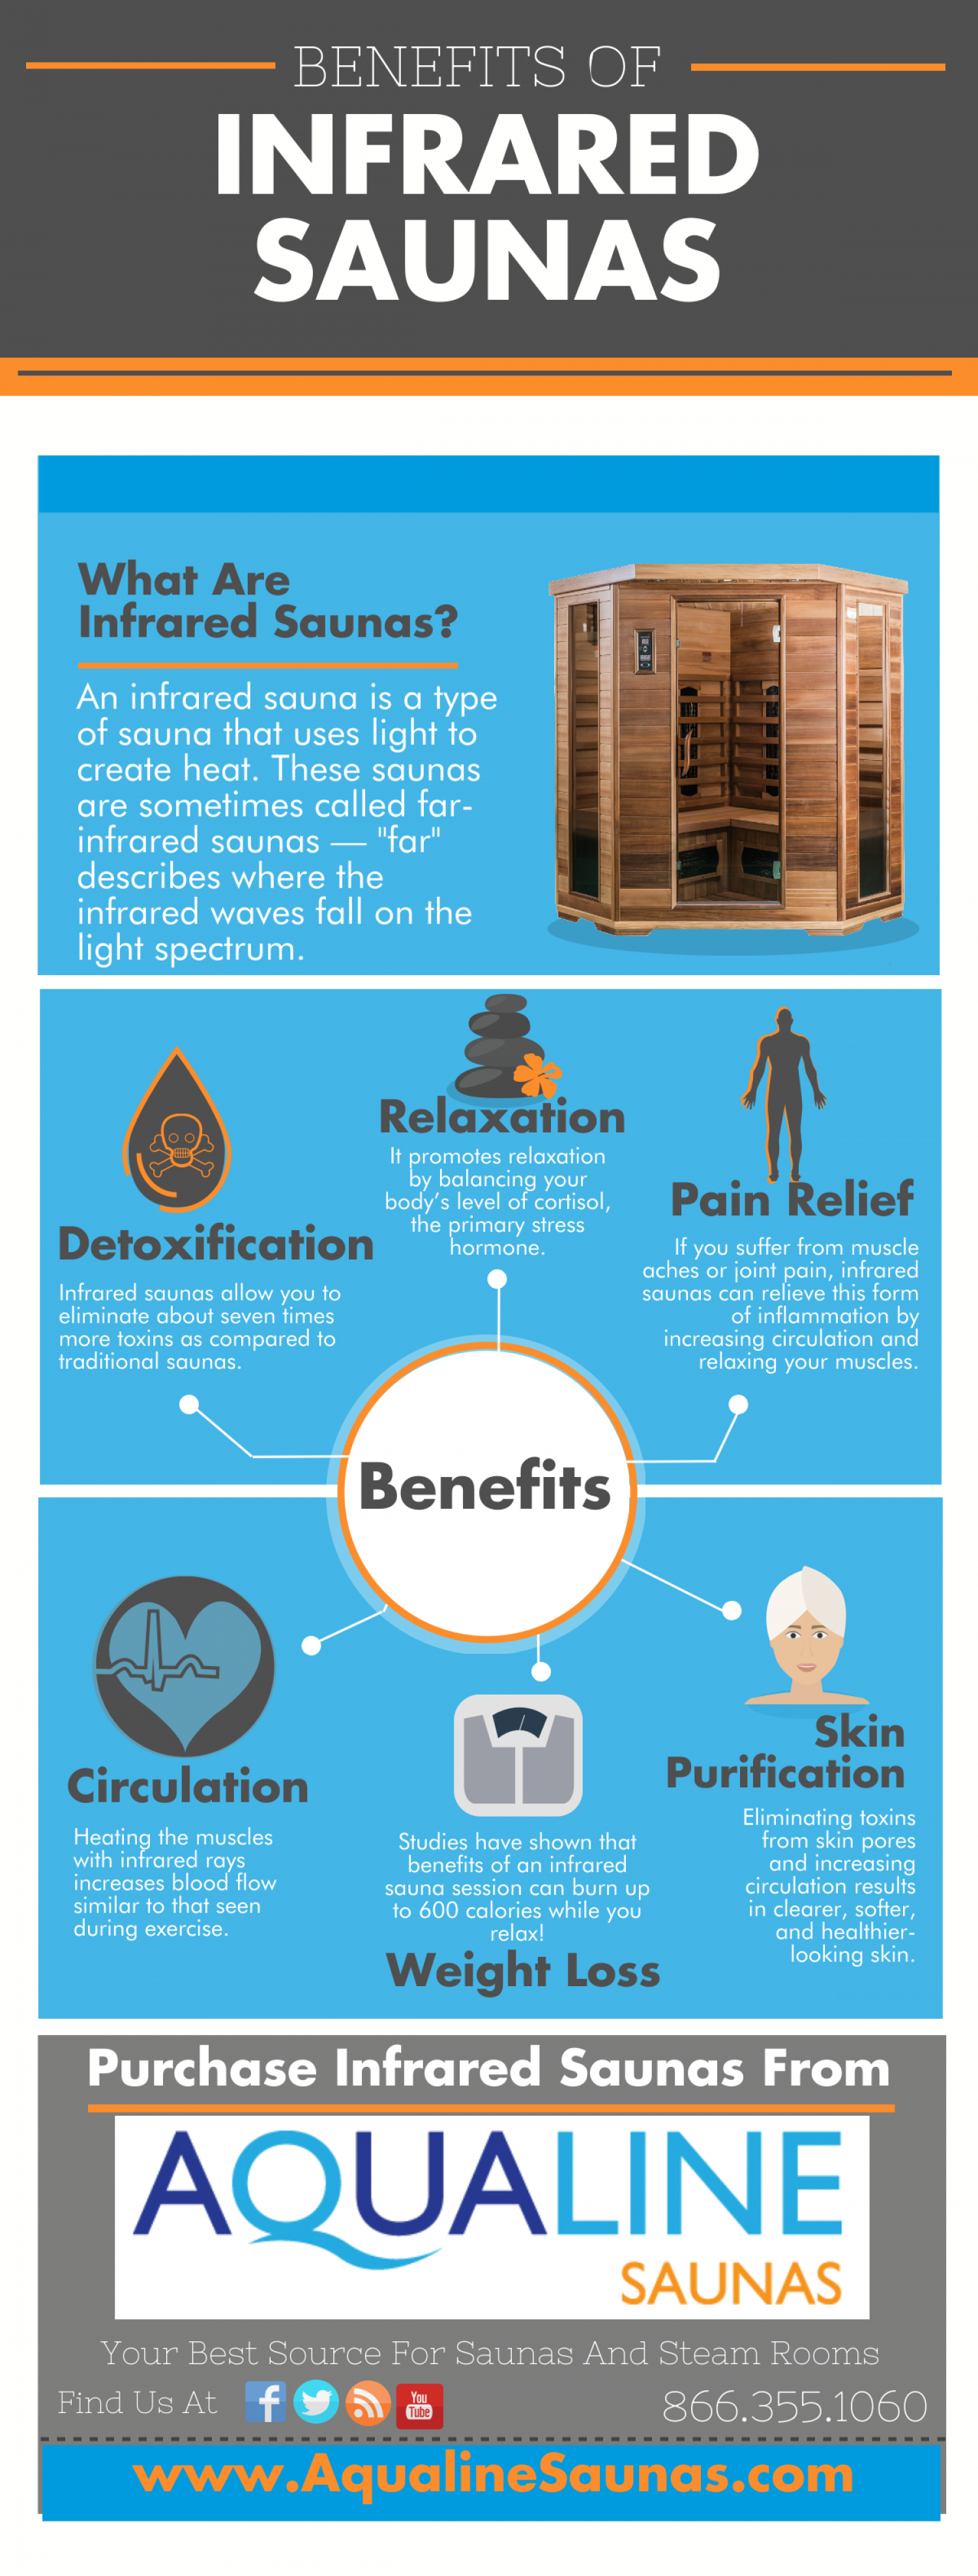 Benefits of Infrared Saunas 